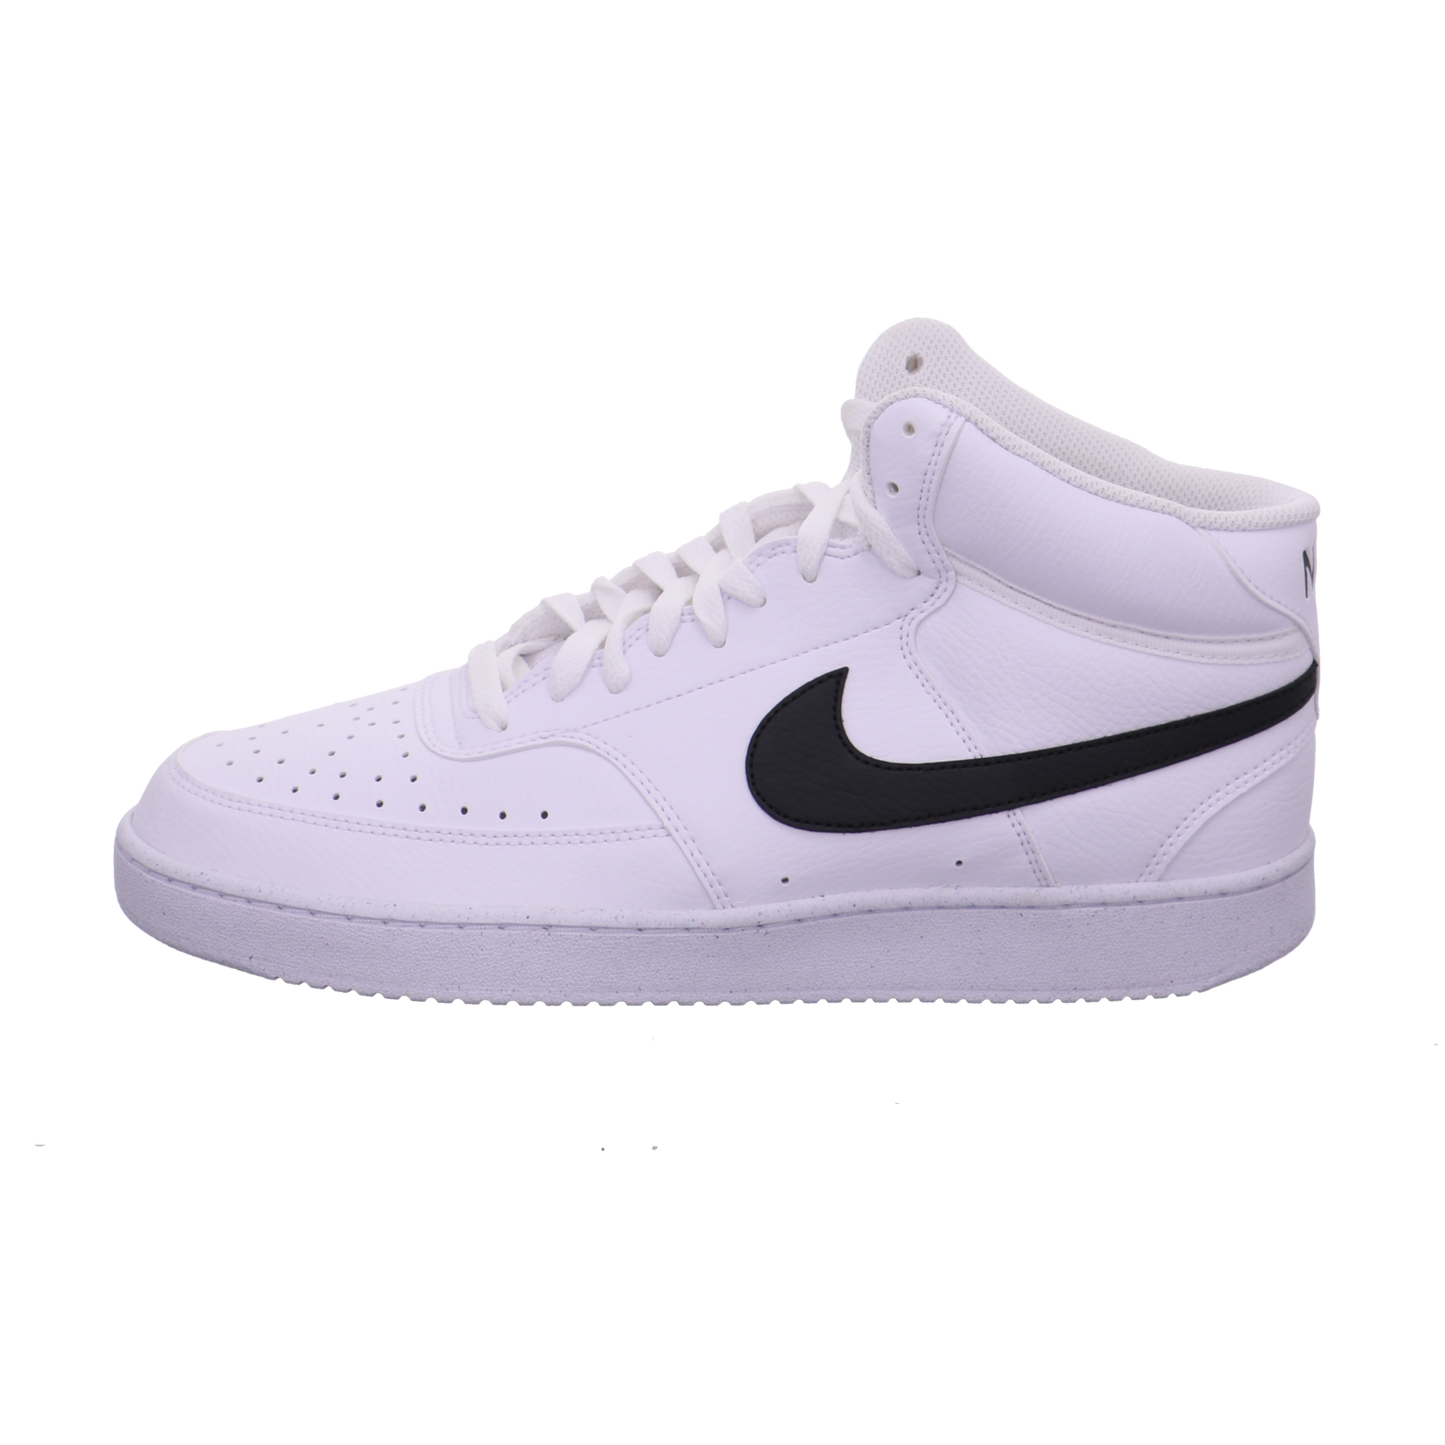 Nike Sneaker weiß-schwarz Bild1